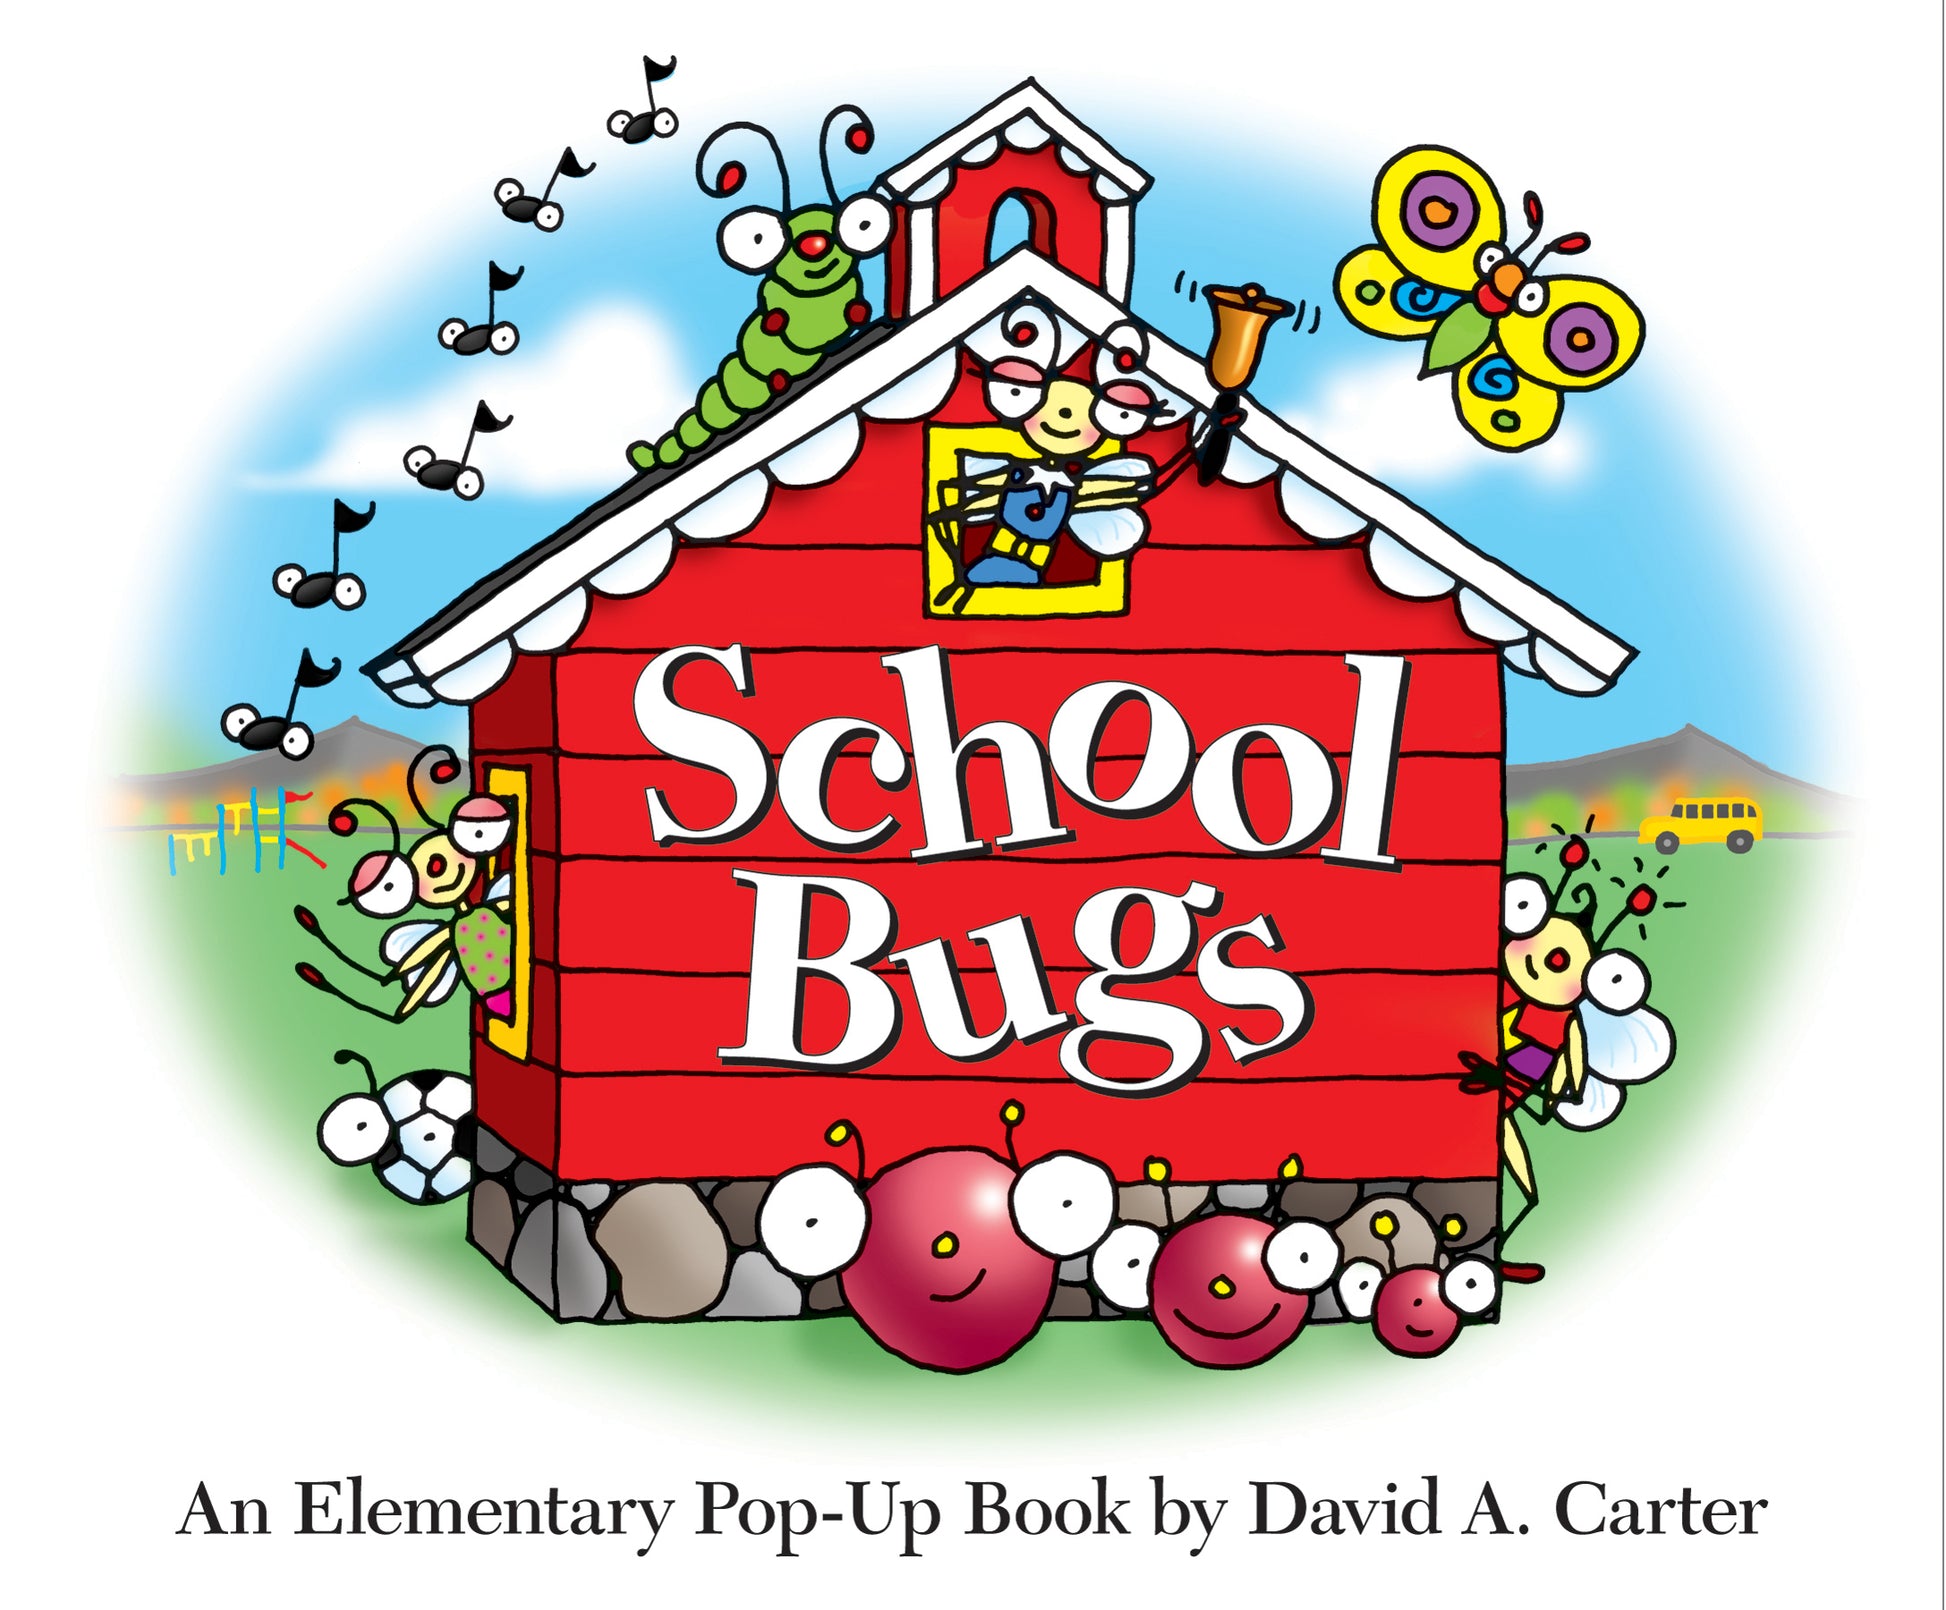 School Bugs An Elementary Pop-up Book by David A. Carter - Favorite Little Things